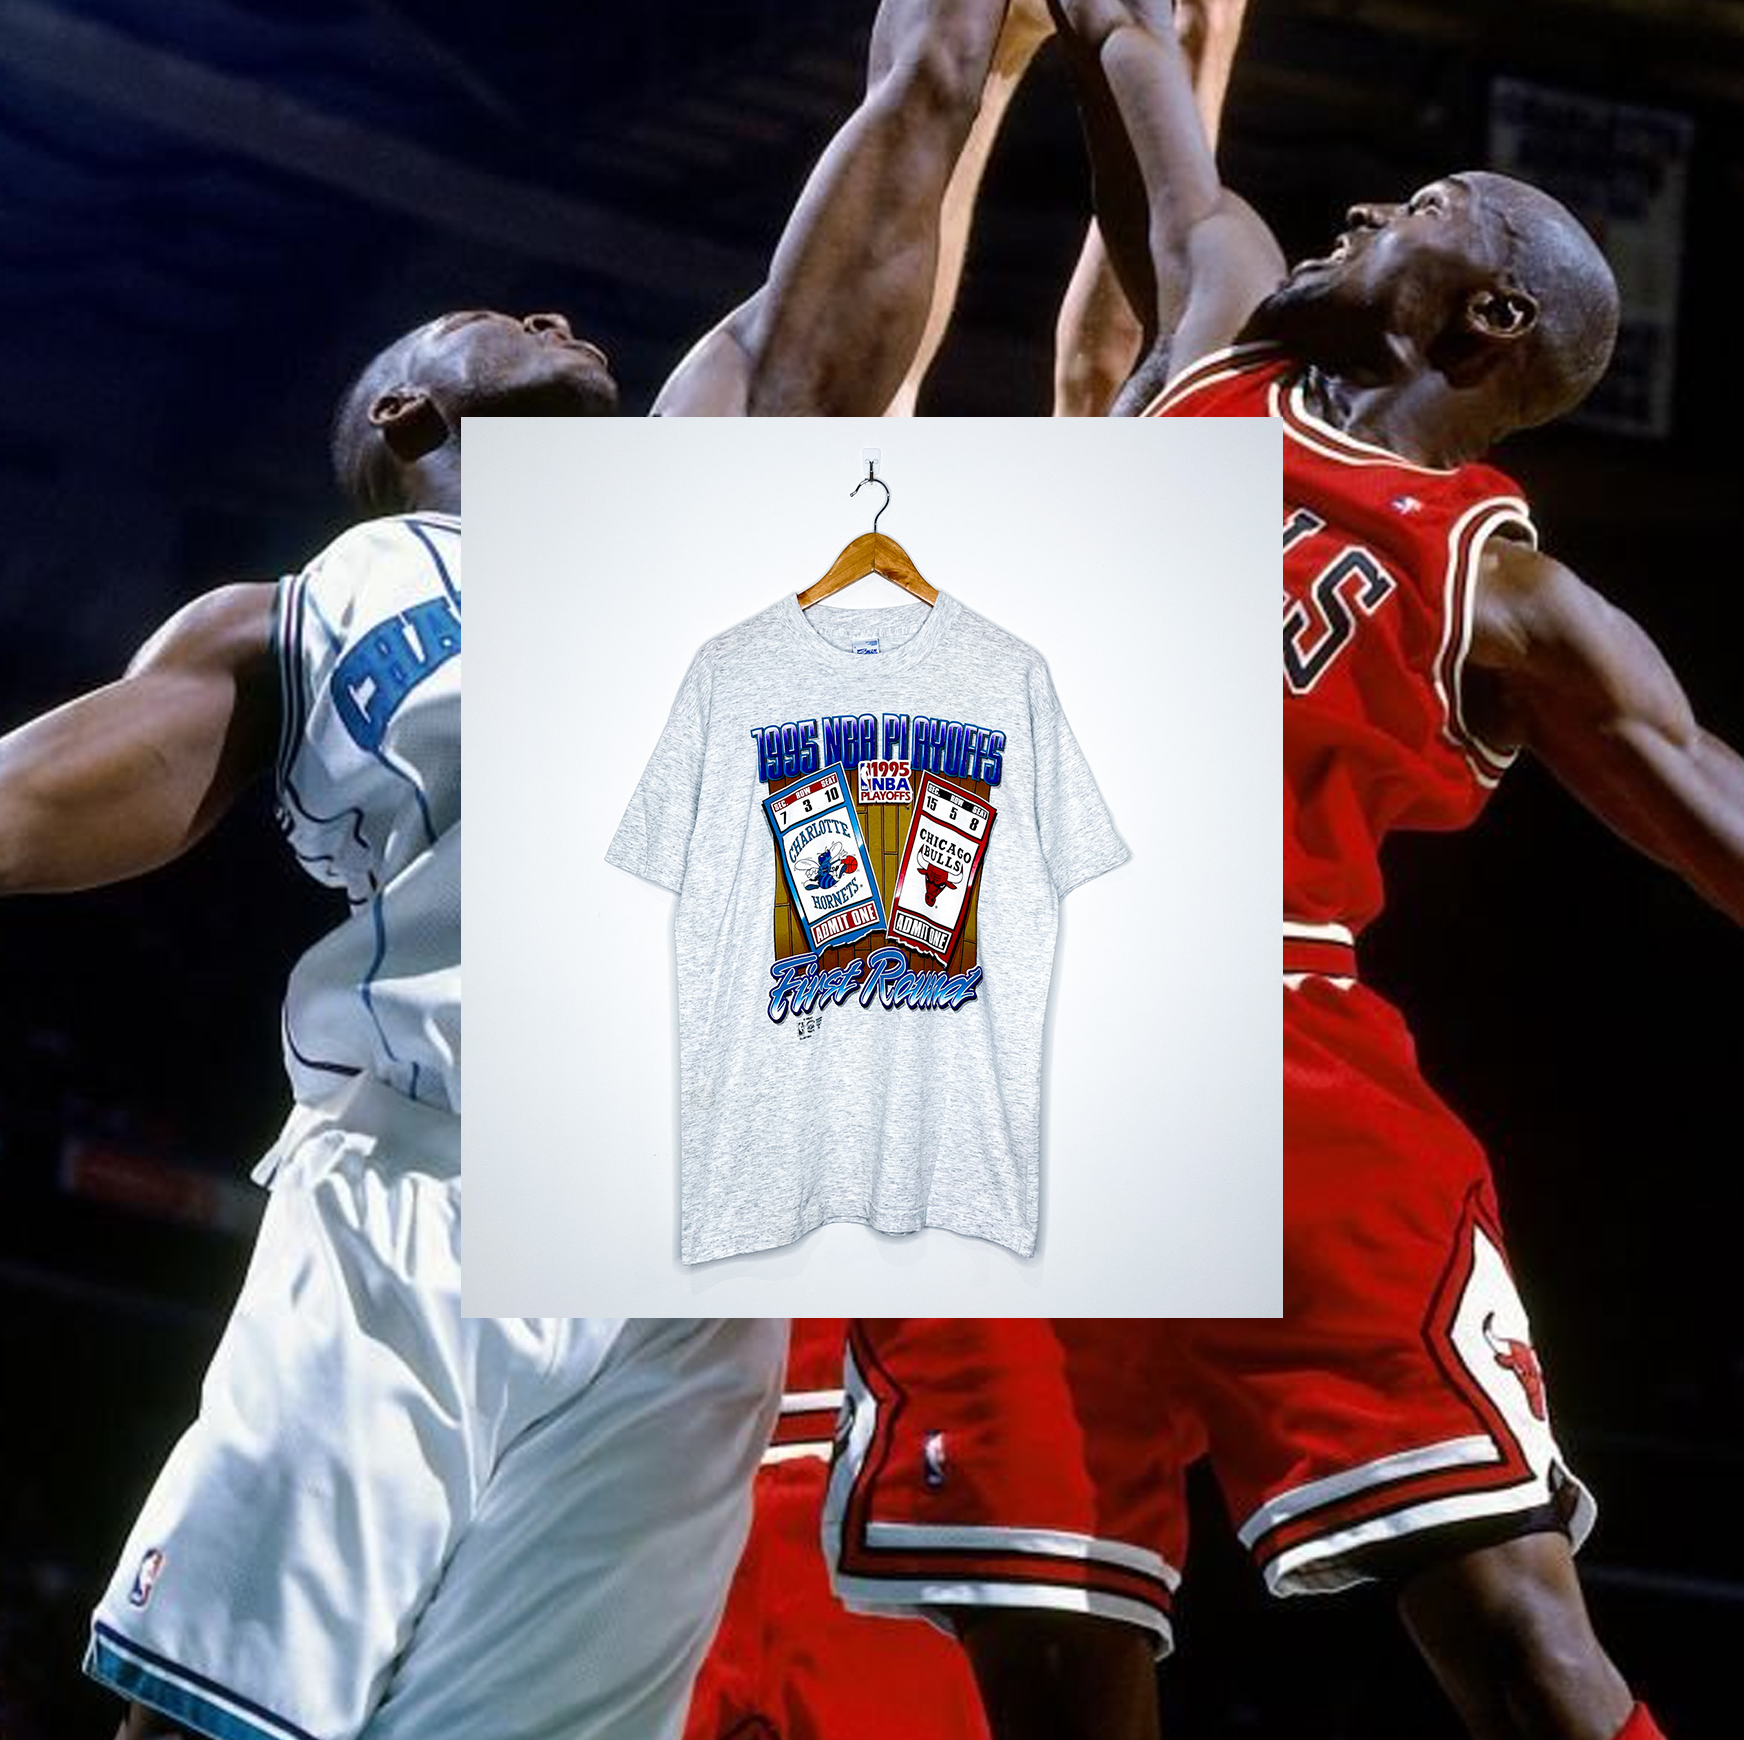 1995 NBA PLAYOFFS "Charlotte Hornets vs Chicago Bulls" VINTAGE TICKET TEE